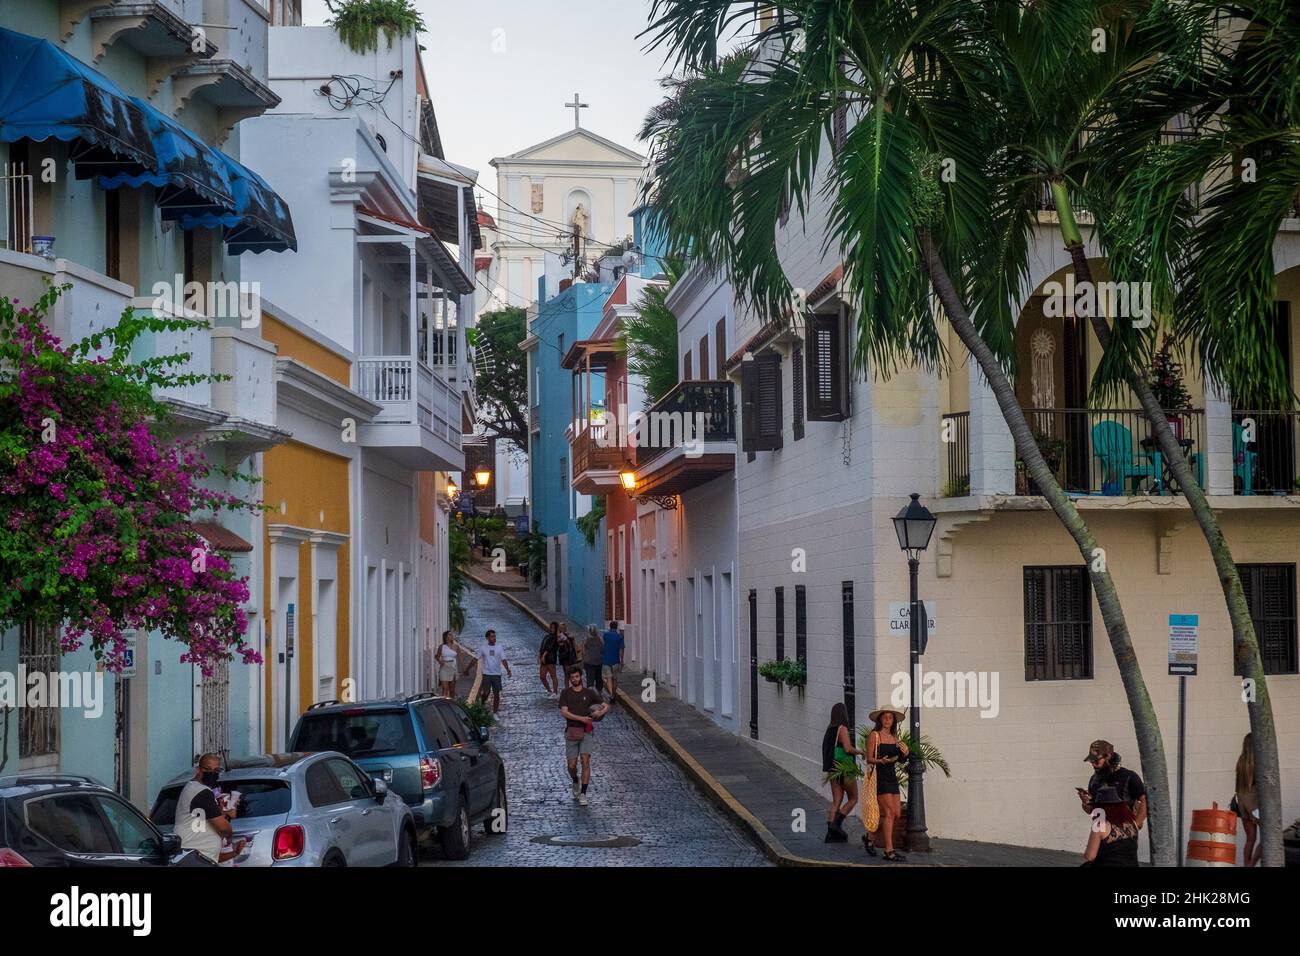 Pedestrians walk on Caleta de las Monjas, San Juan, Puerto Rico Stock Photo  - Alamy